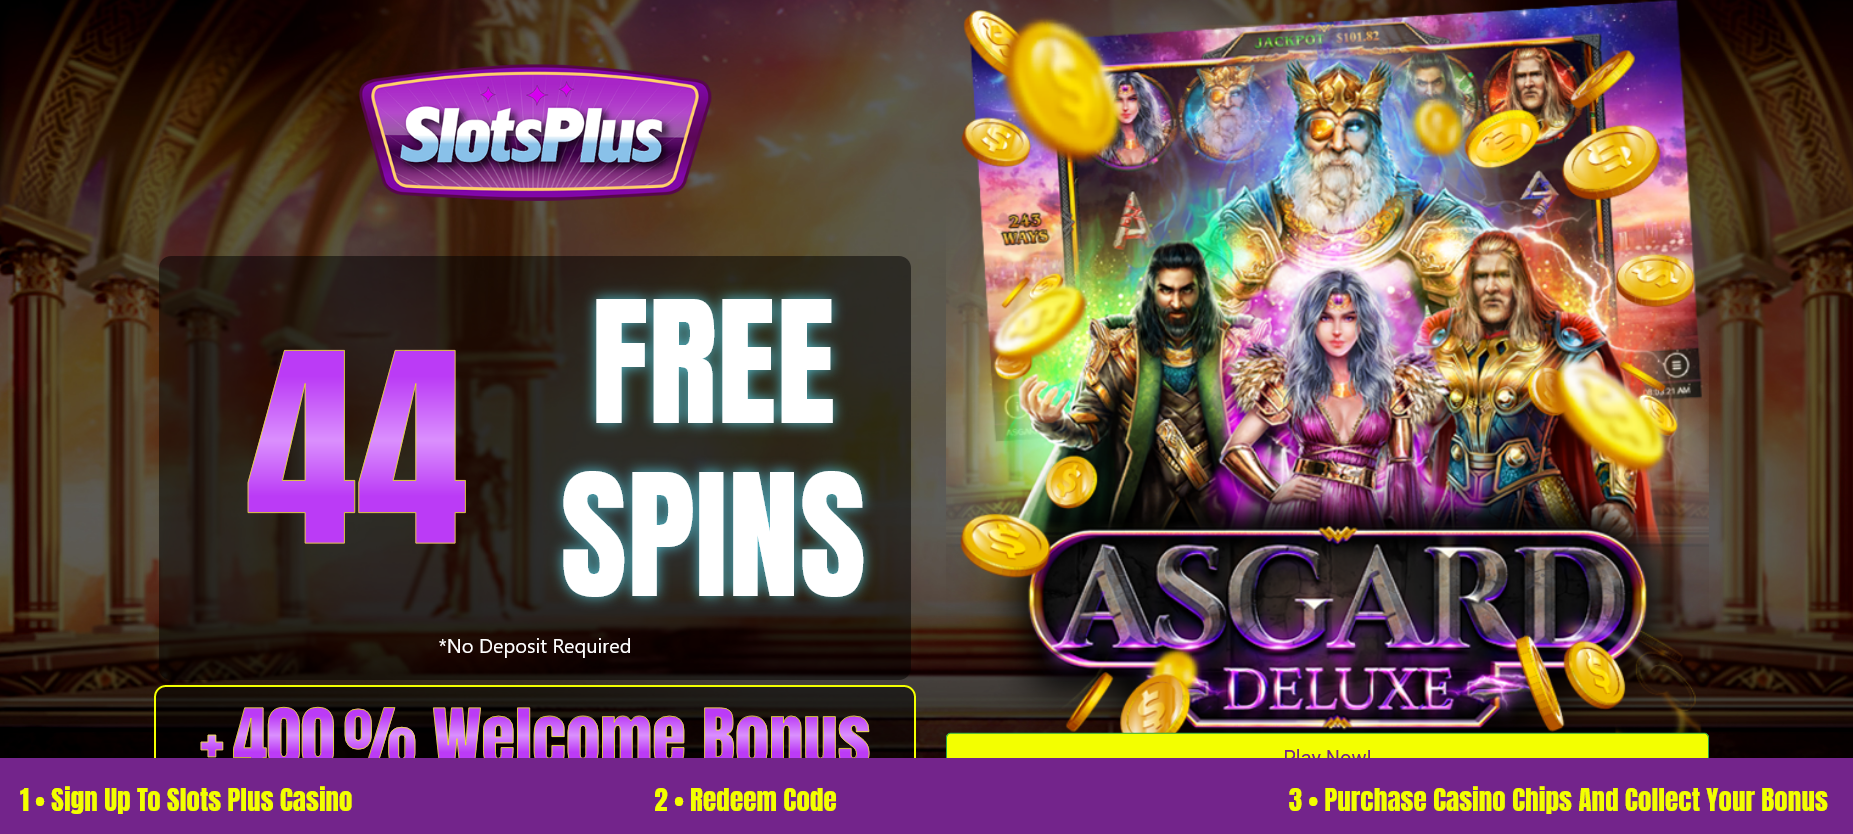 Slots Plus Casino-400% WELCOME BONUS + 44 FREE SPINS